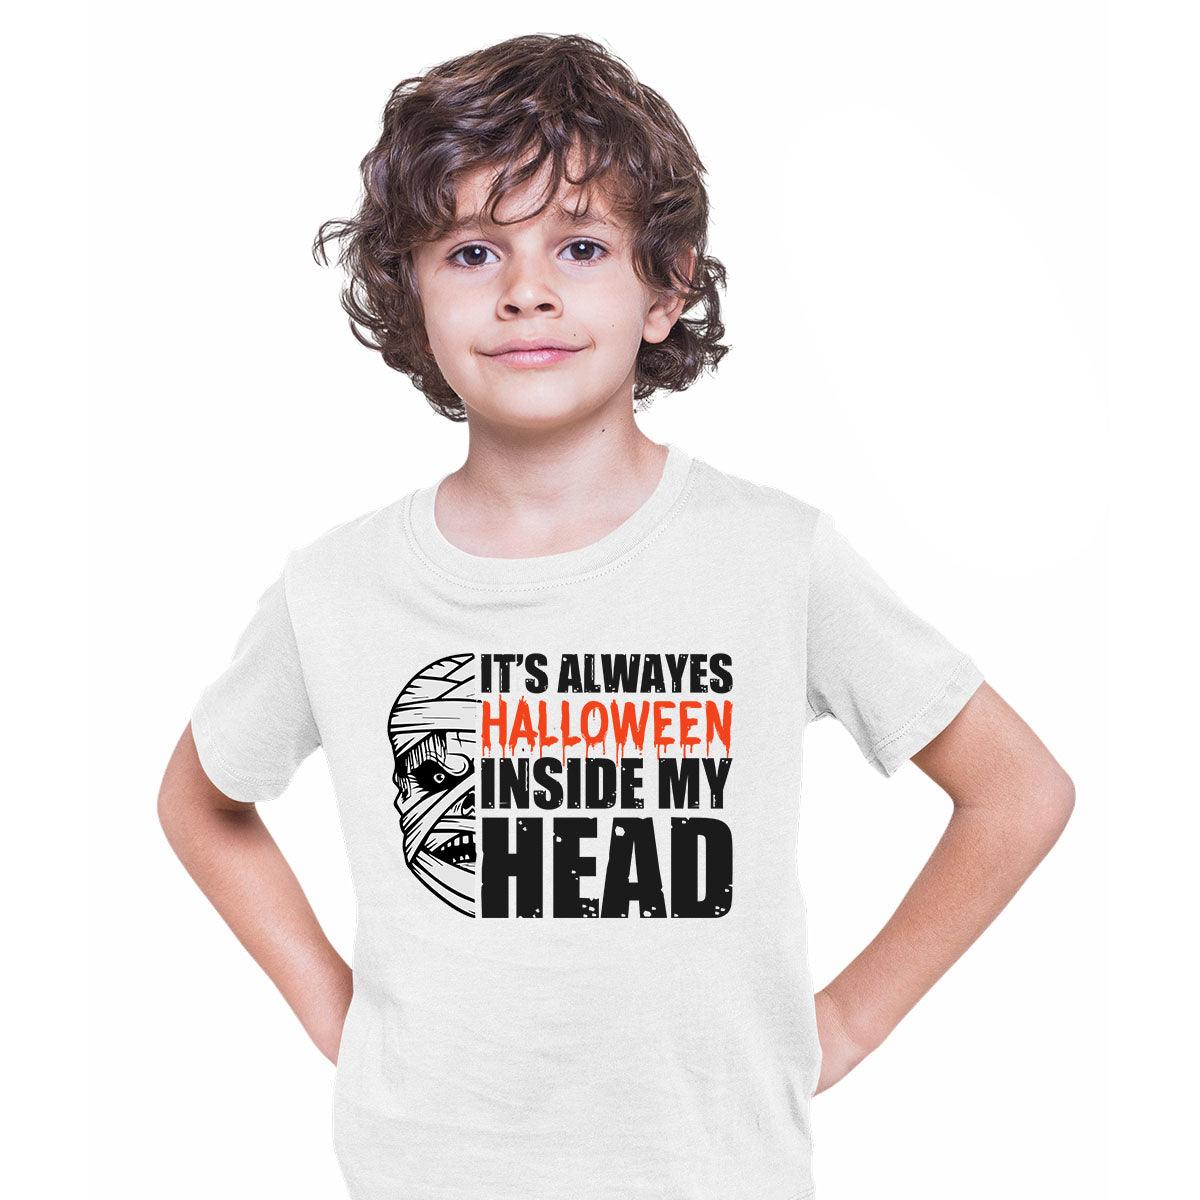 Halloween inside my head festive T-shirt for Kids - Kuzi Tees